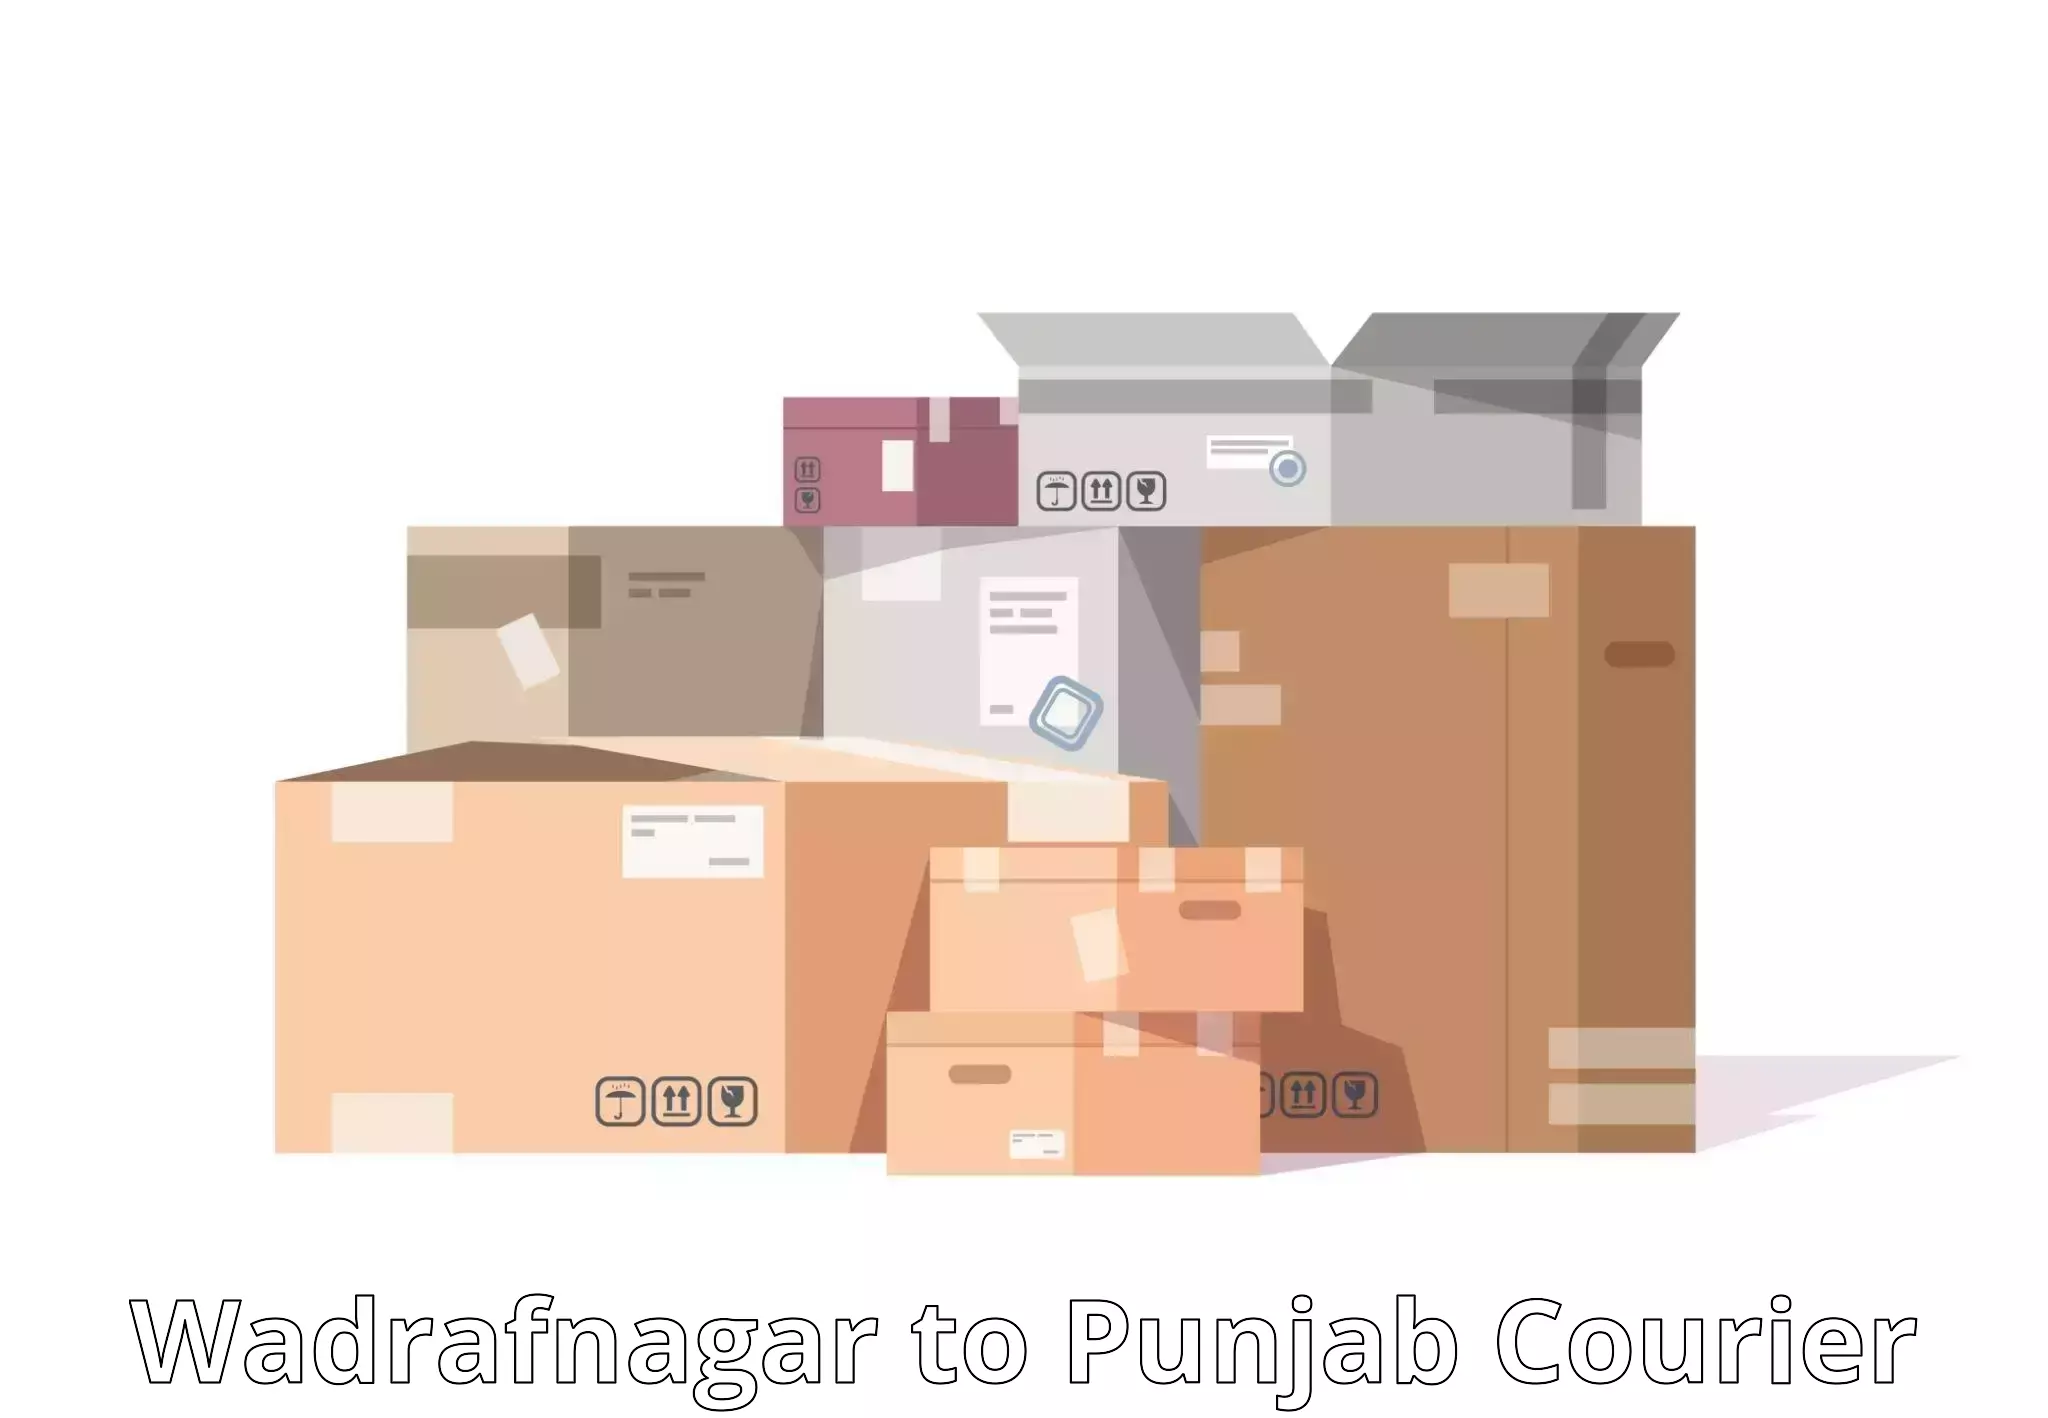 Enhanced tracking features Wadrafnagar to Mohali